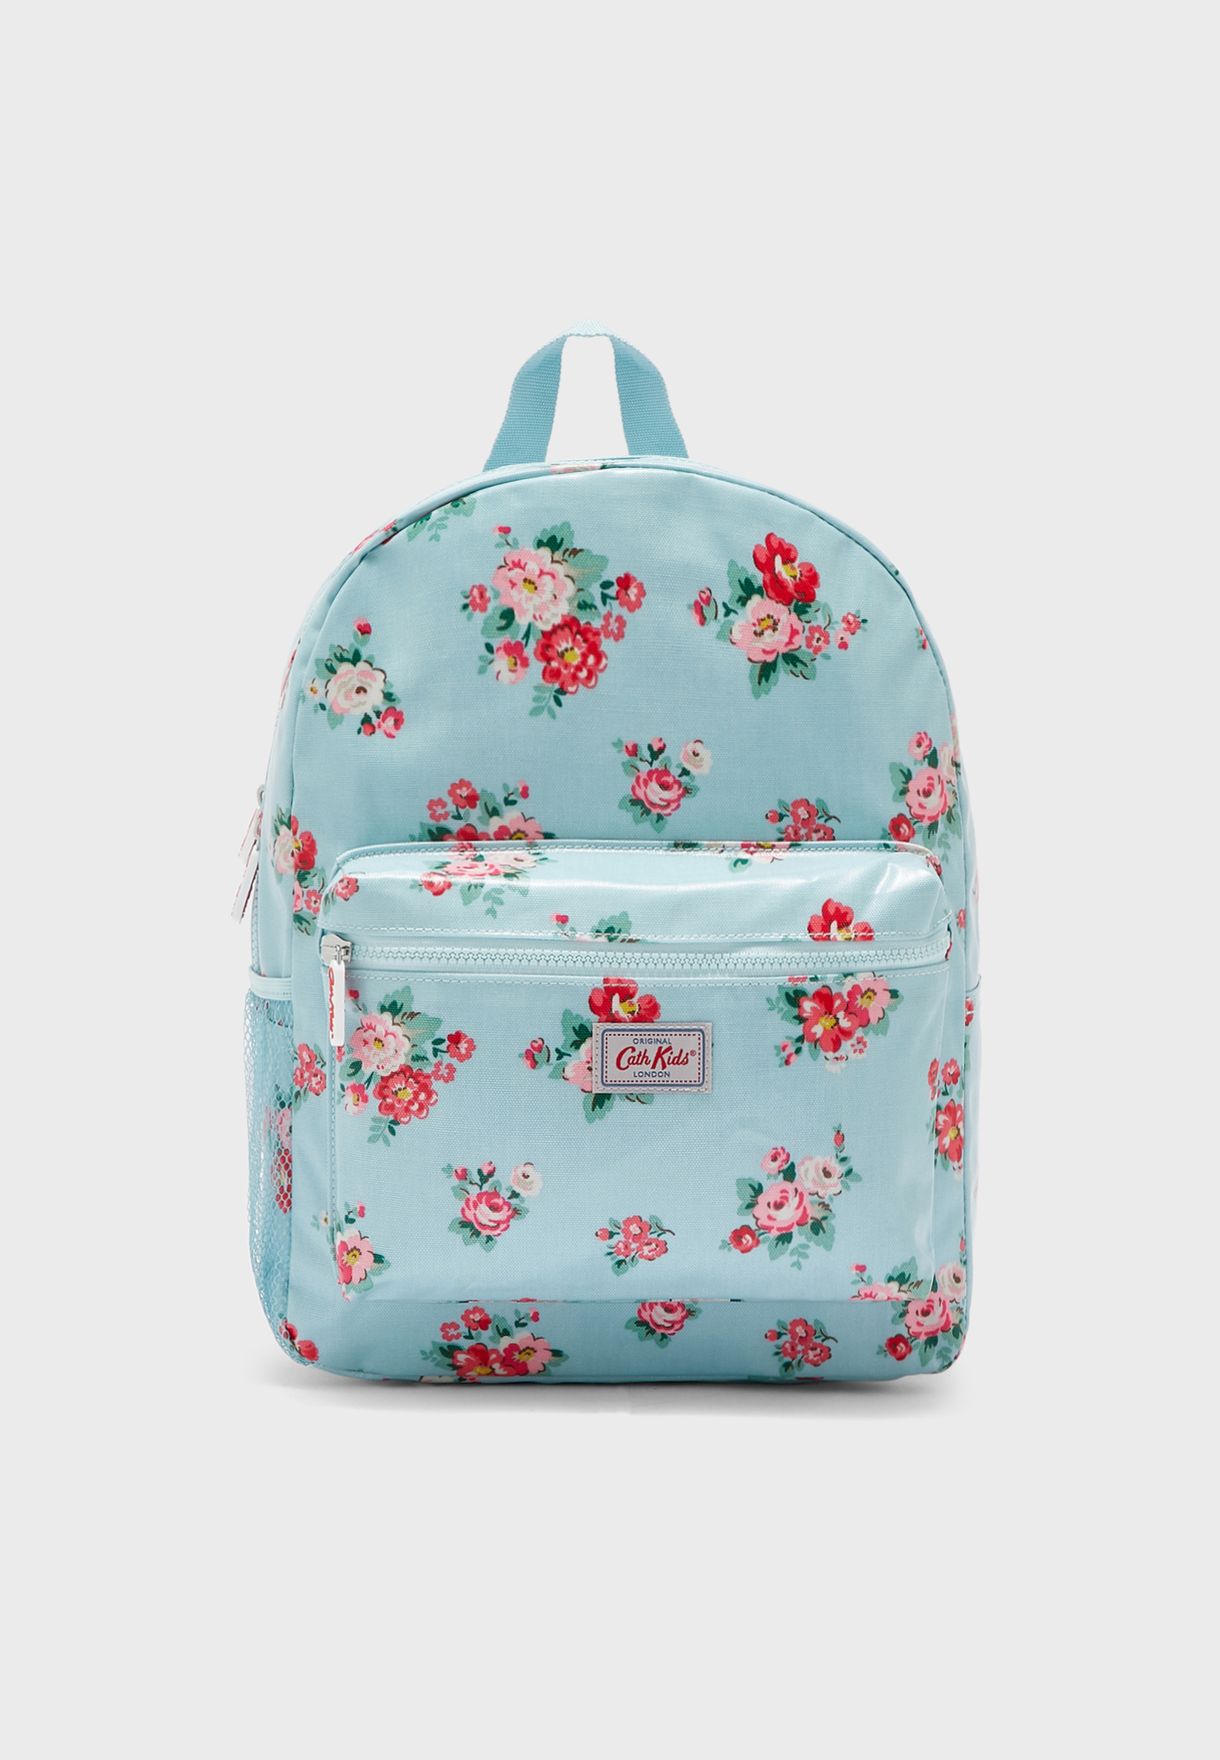 cath kidston floral bag